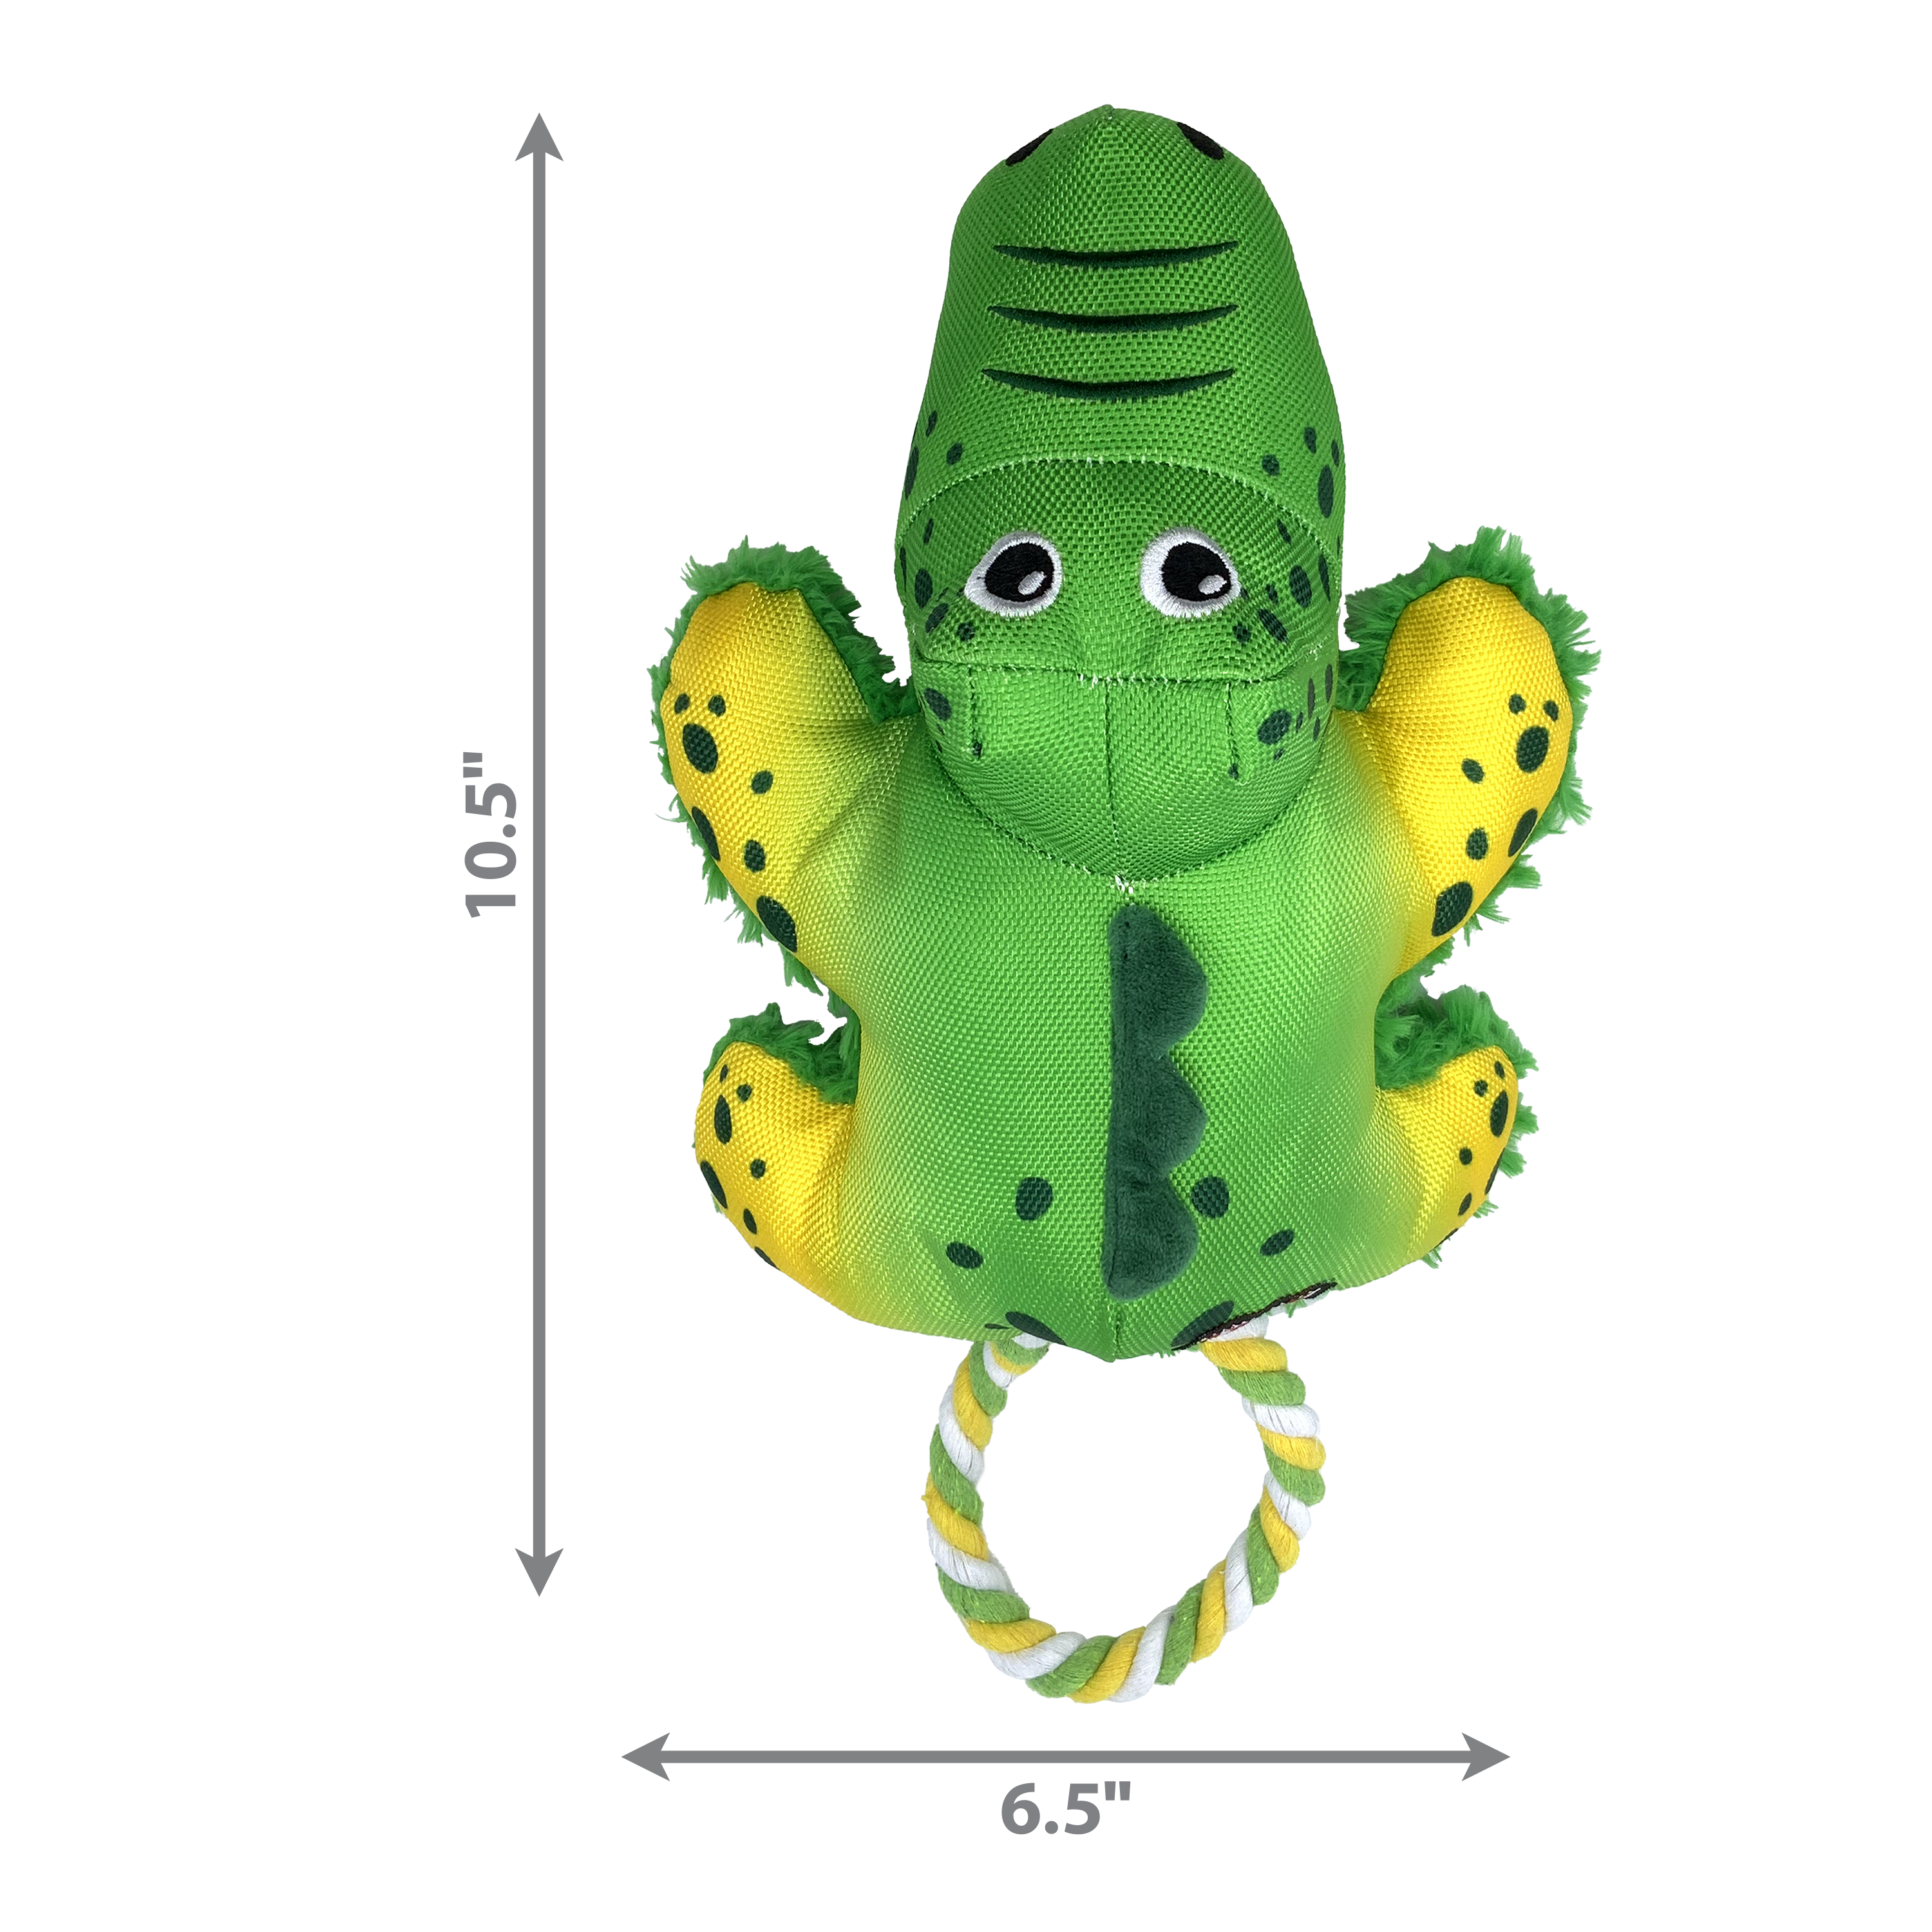 Cozie Tuggz Alligator dimoffpack product image